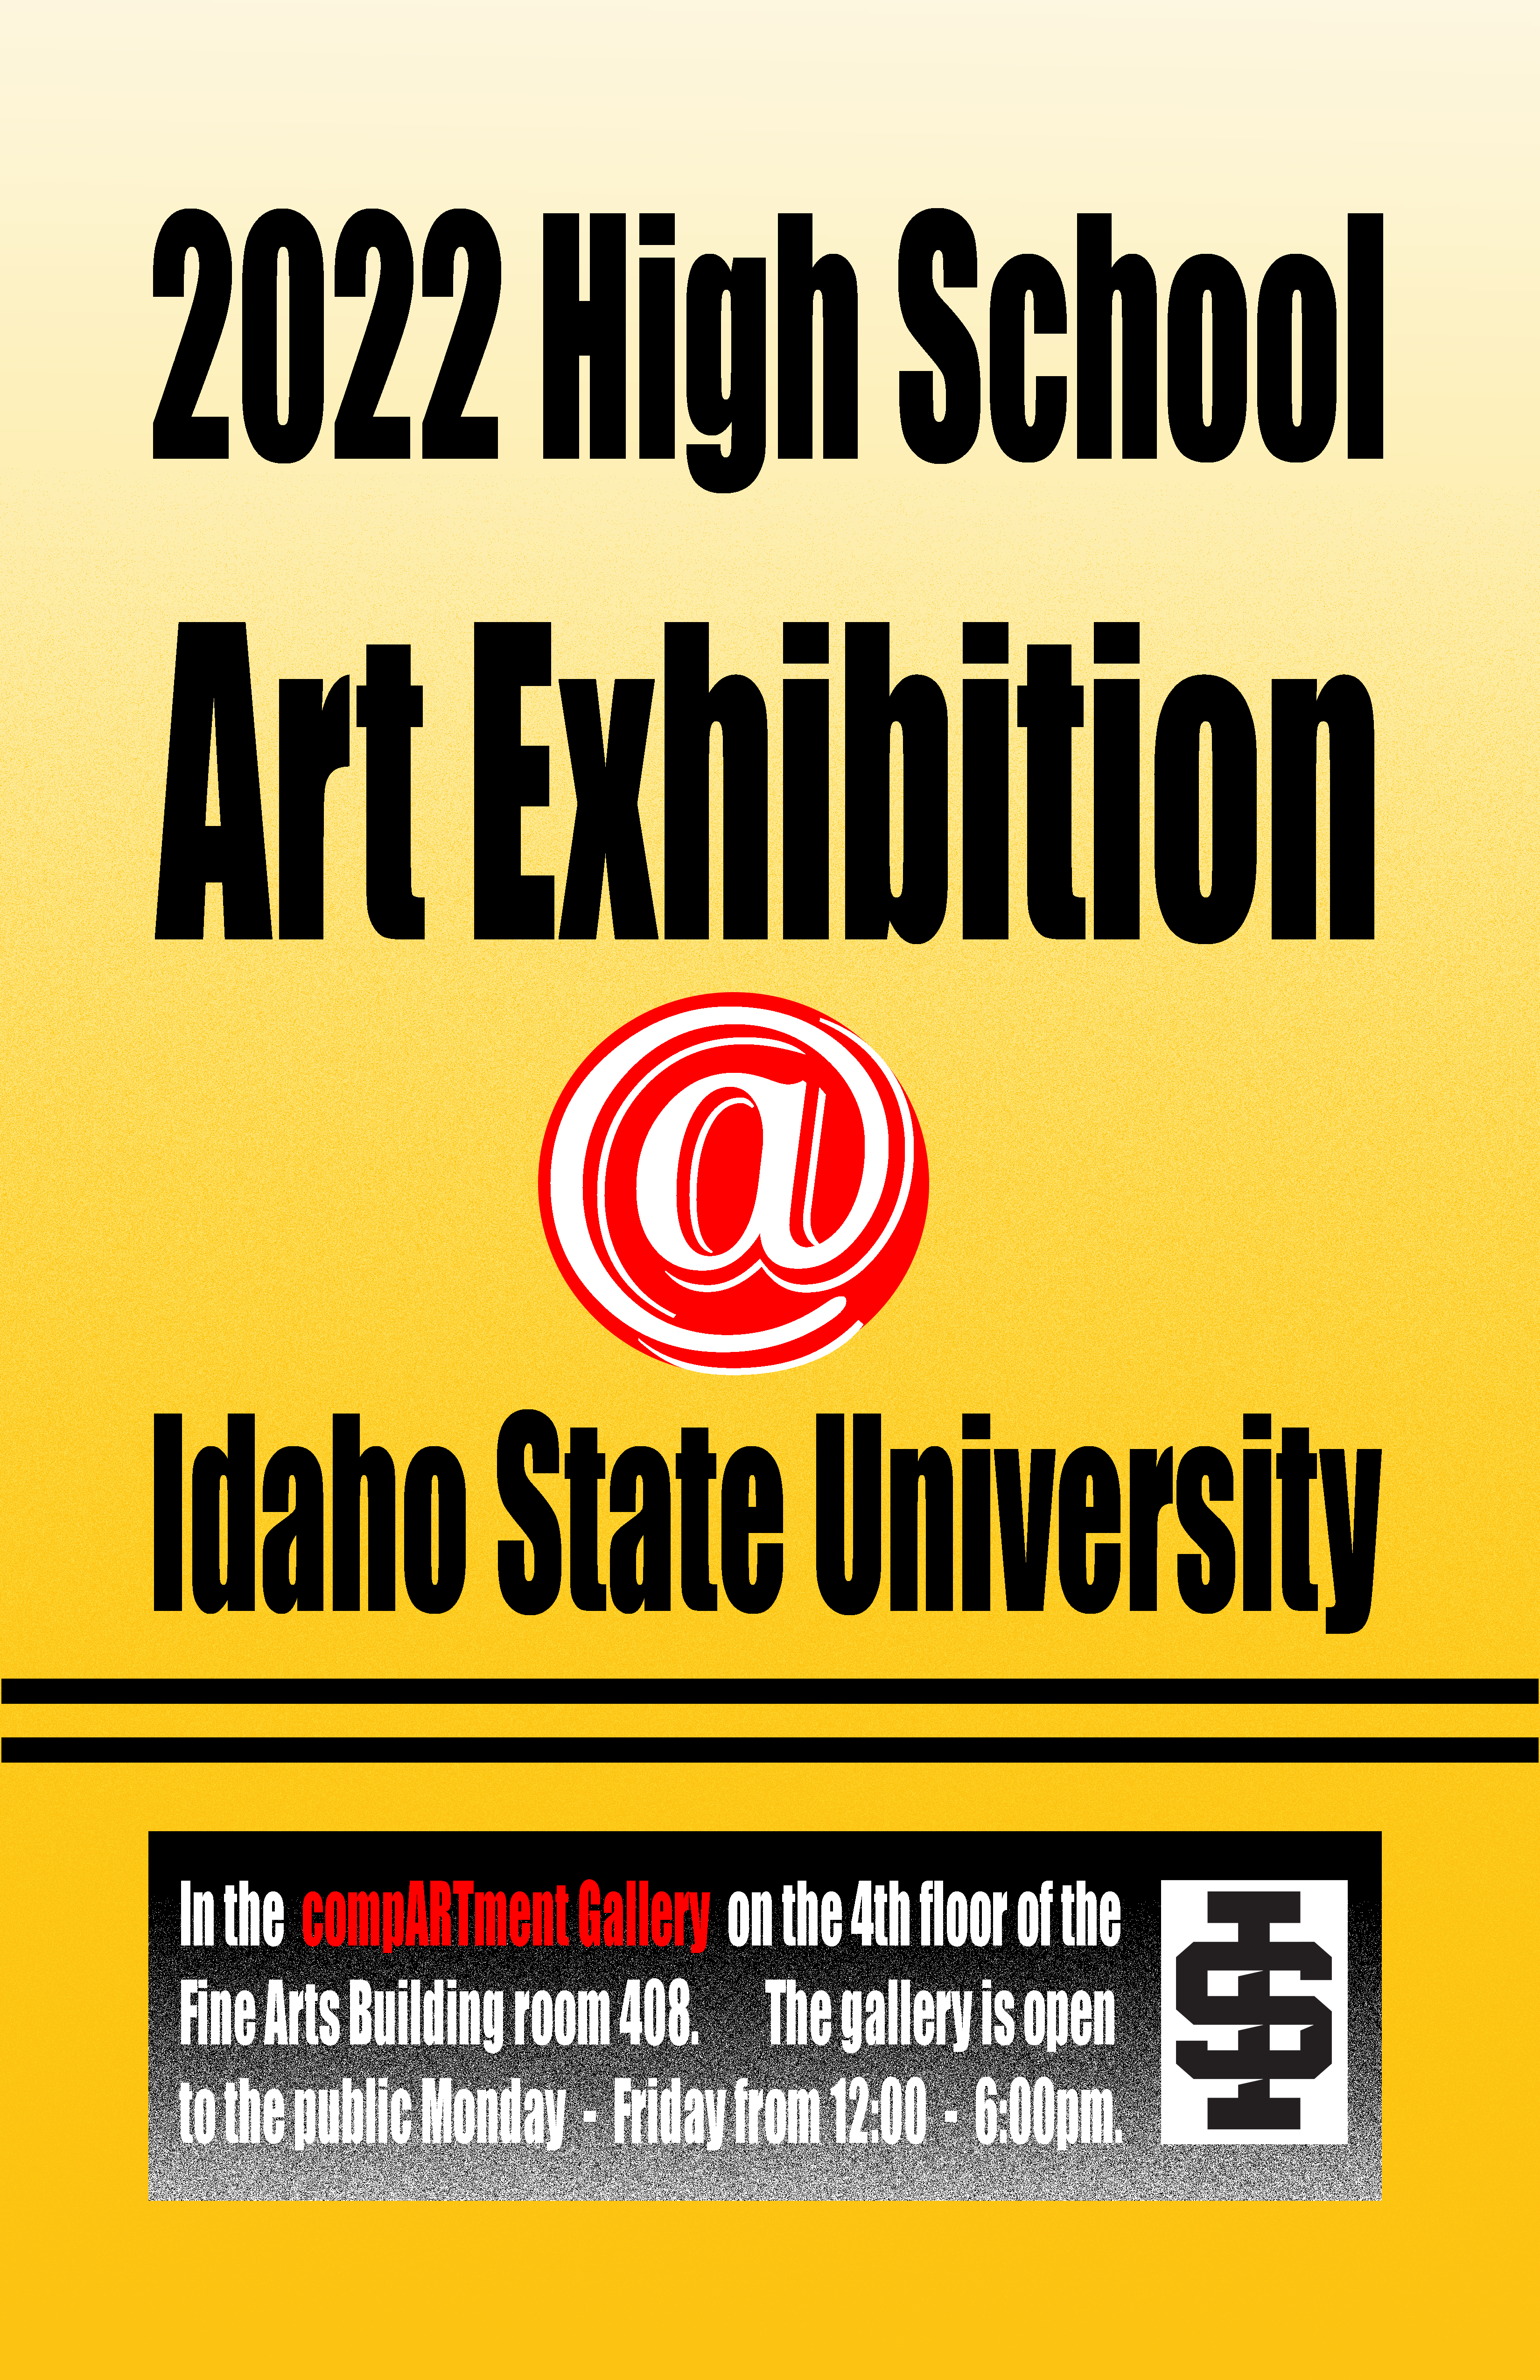 2022 High School Art Exhibition at I.S.U.